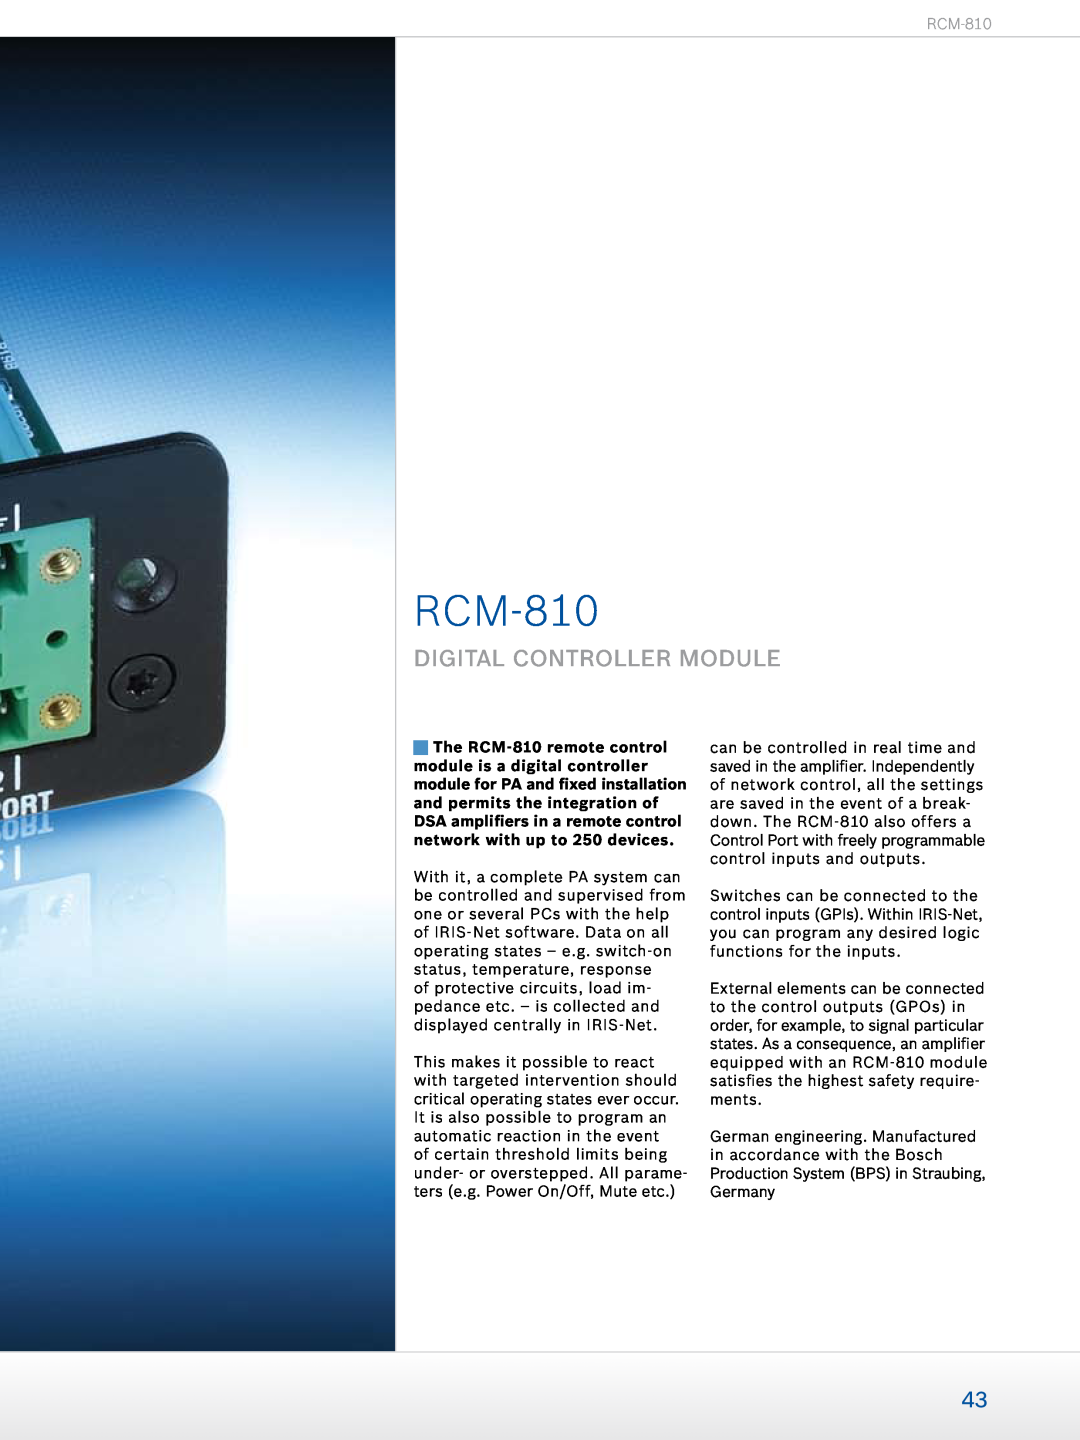 Dynacord Professional Power Amplifiers manual RCM-810, digital controller module 